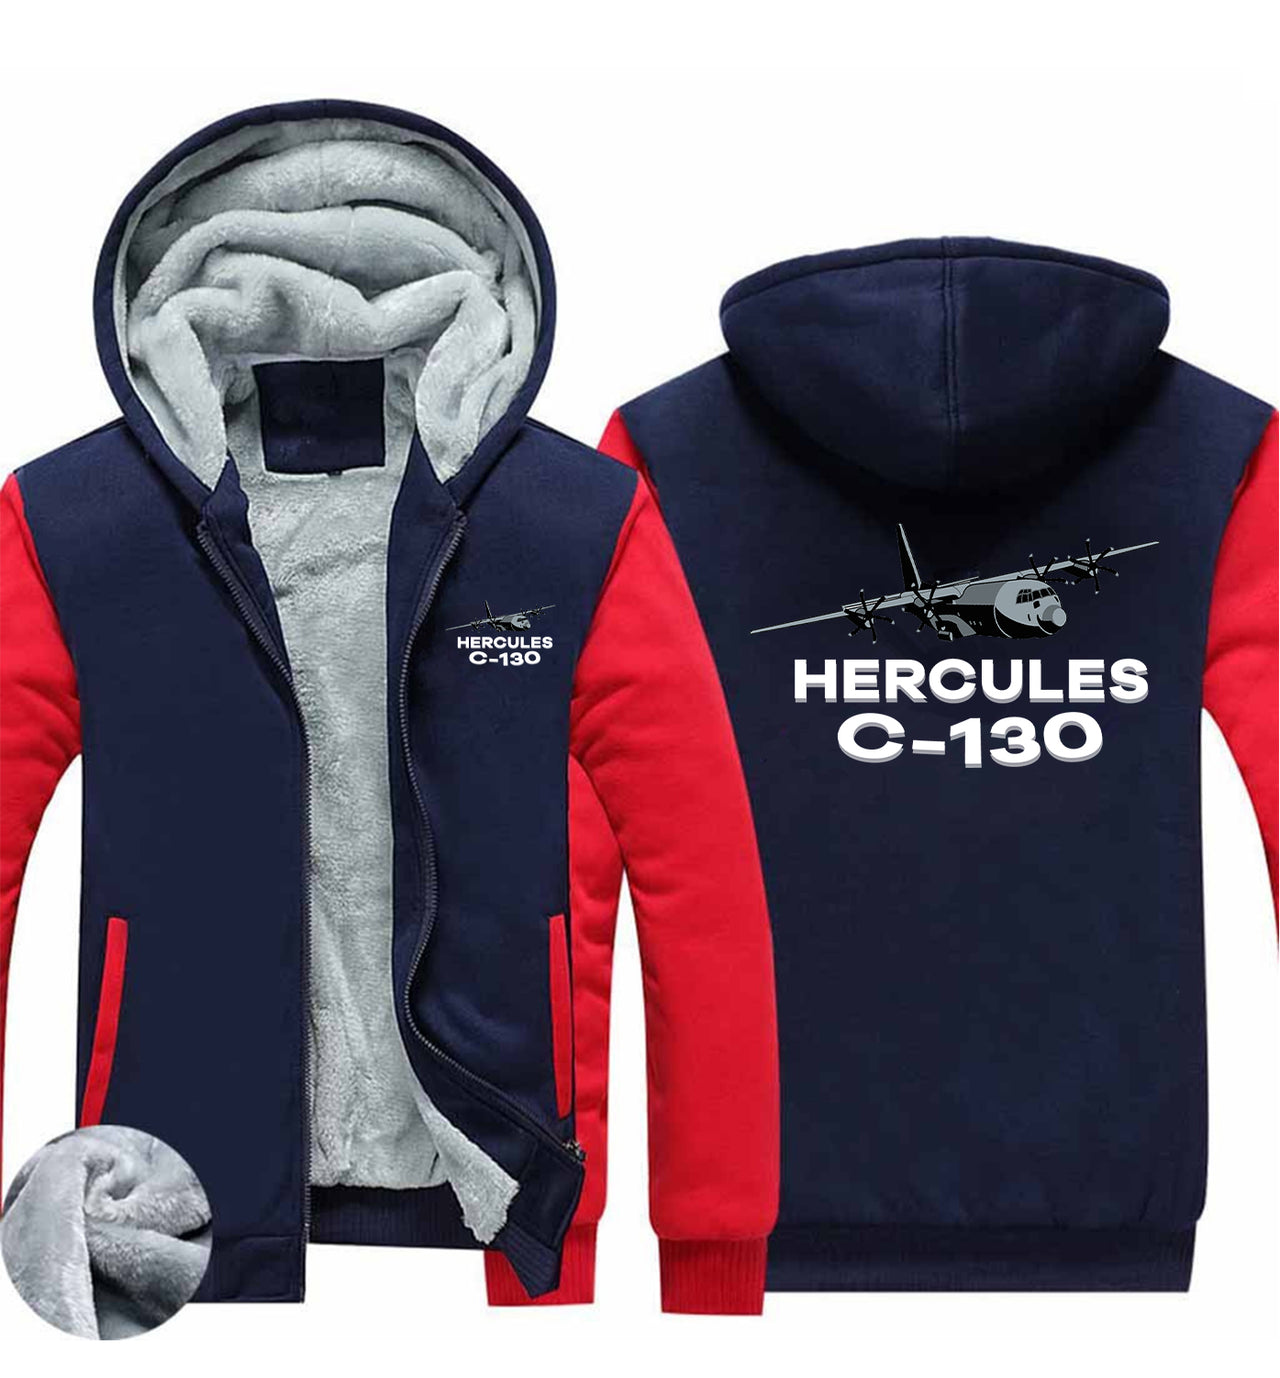 The Hercules C130 Designed Zipped Sweatshirts